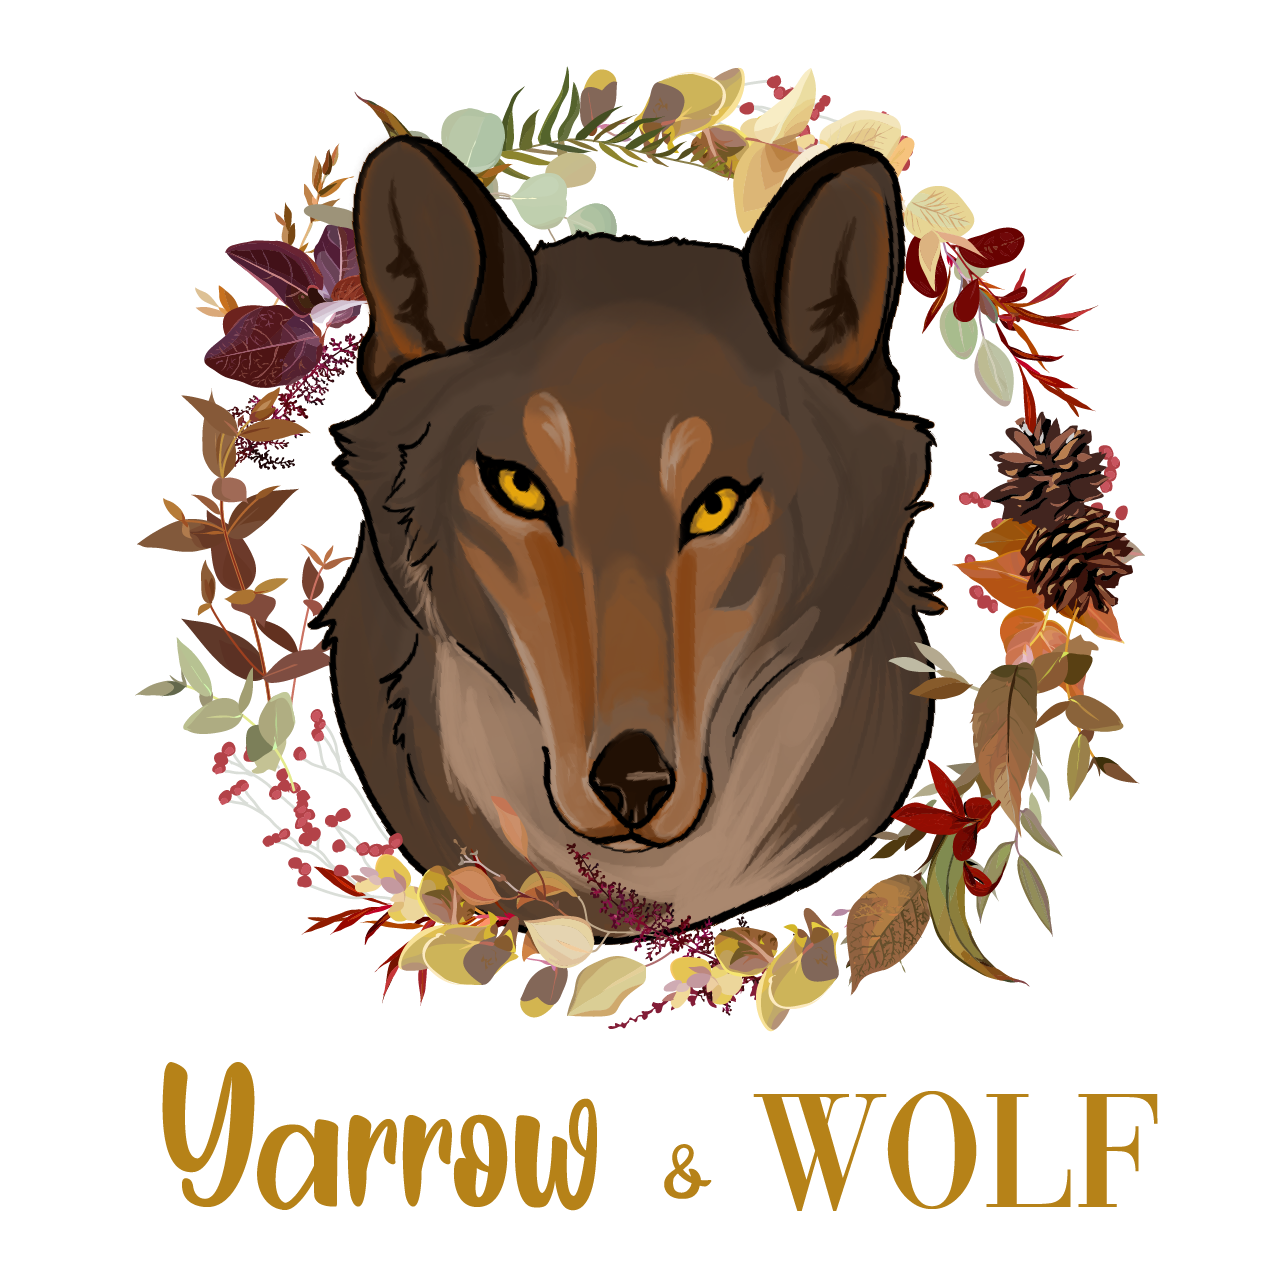 Yarrow & Wolves